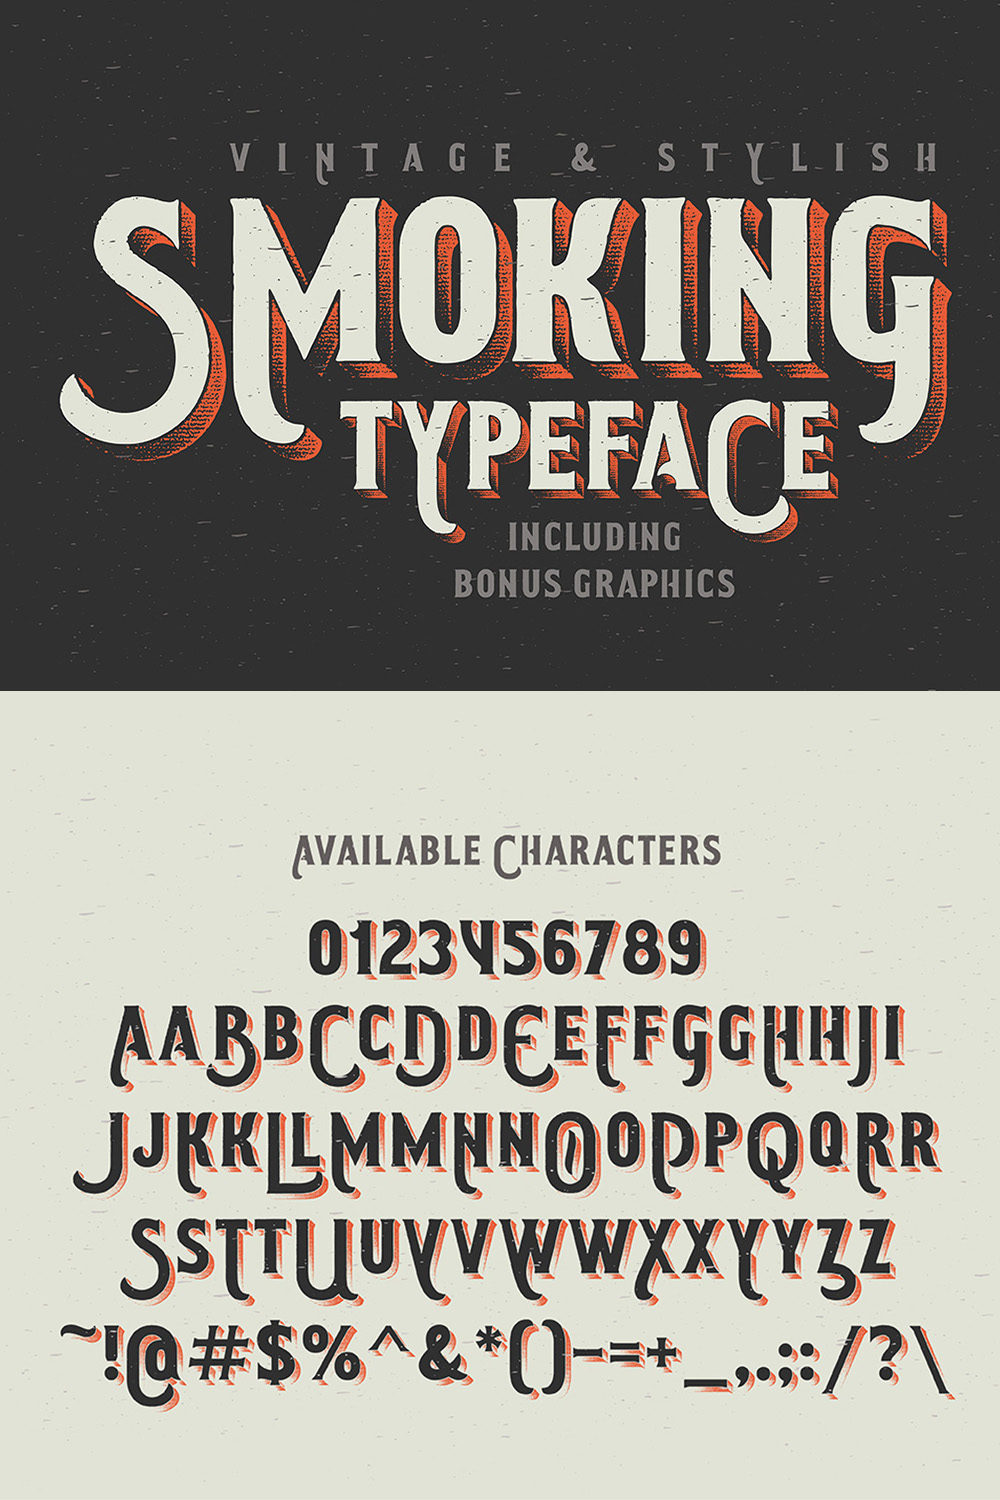 Retro Font Smoking Typeface Design pinterest image.